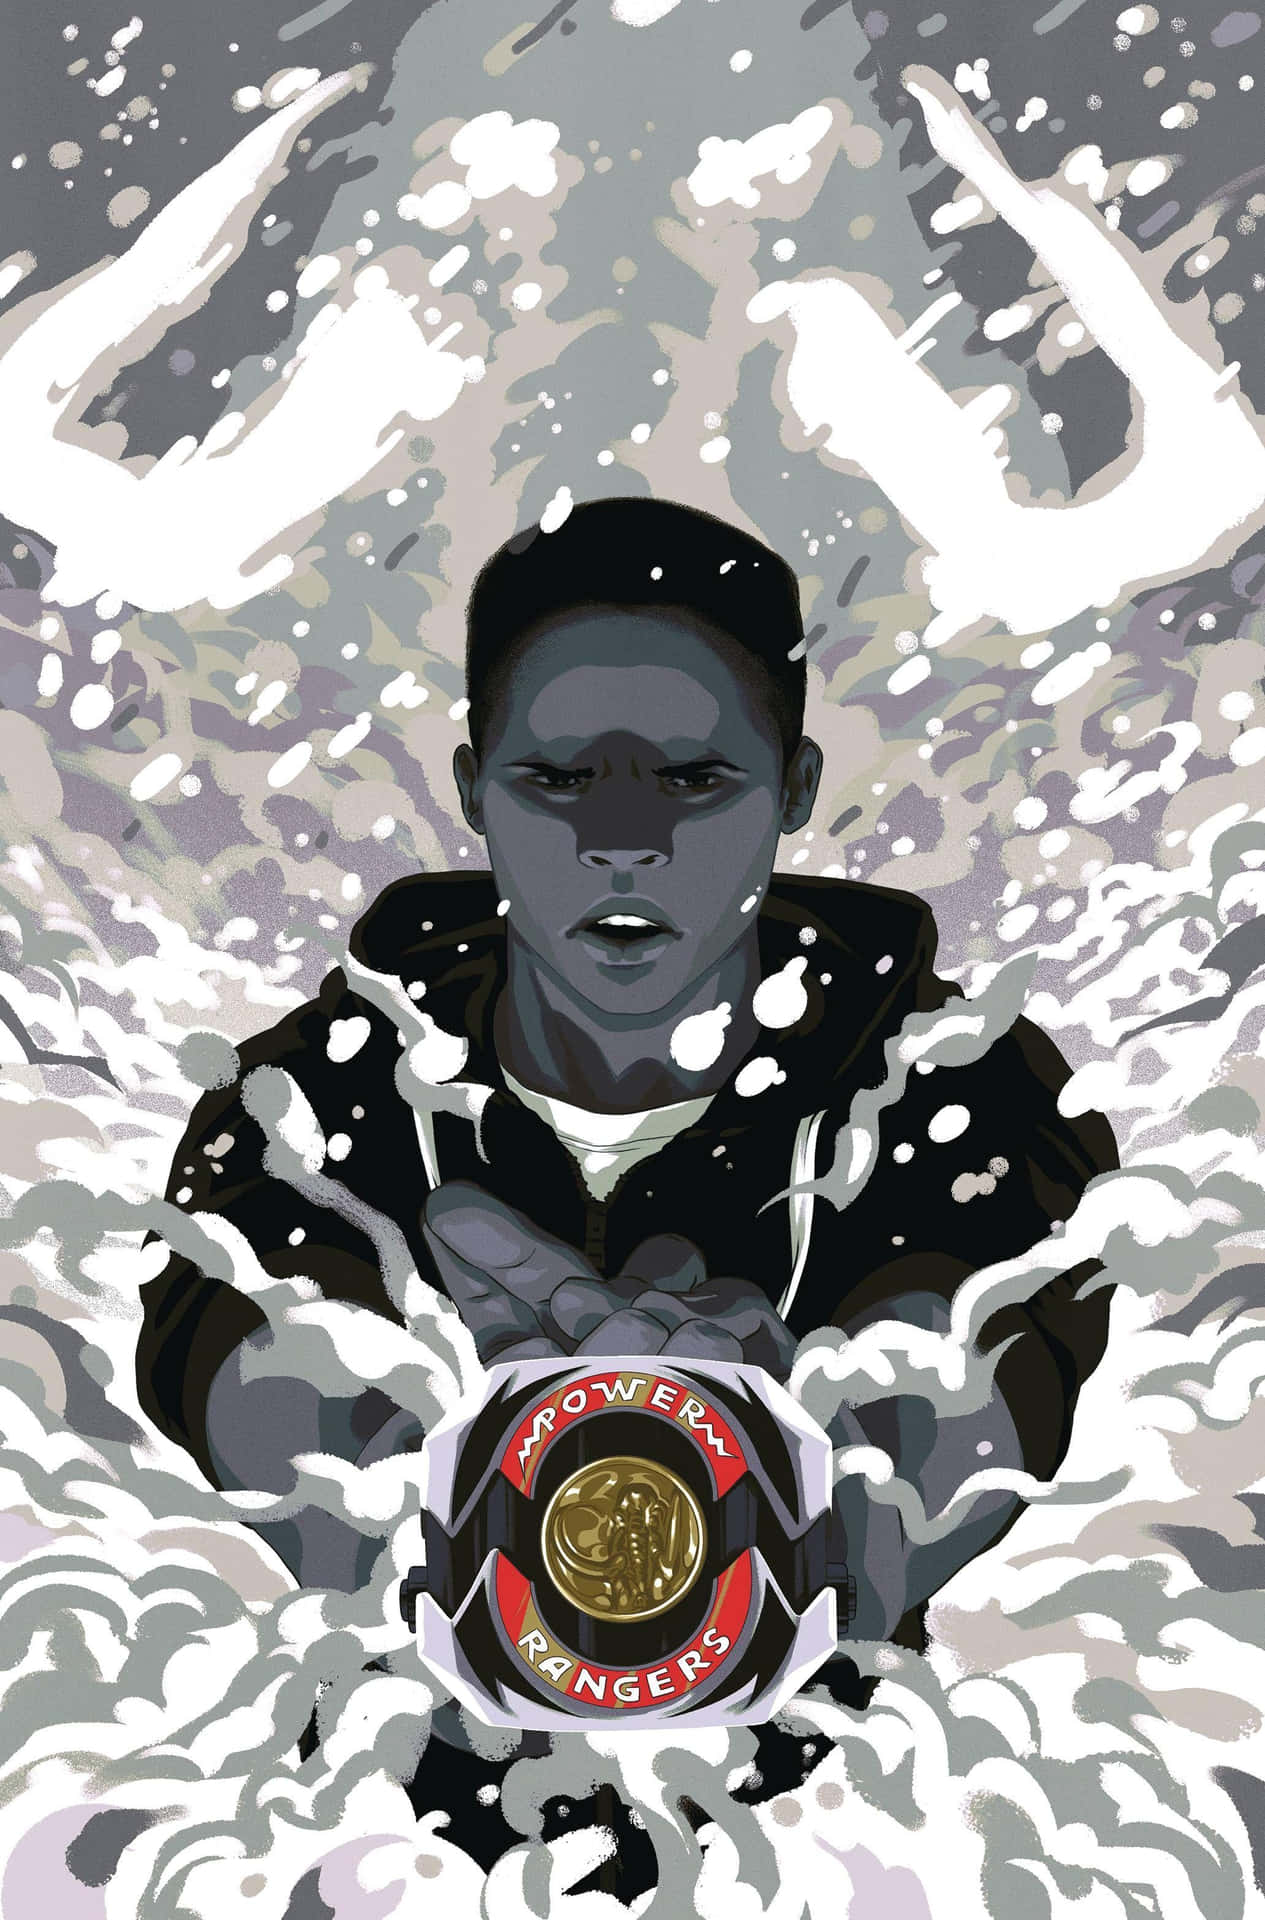 Black Ranger Snowy Backdrop Artwork Wallpaper